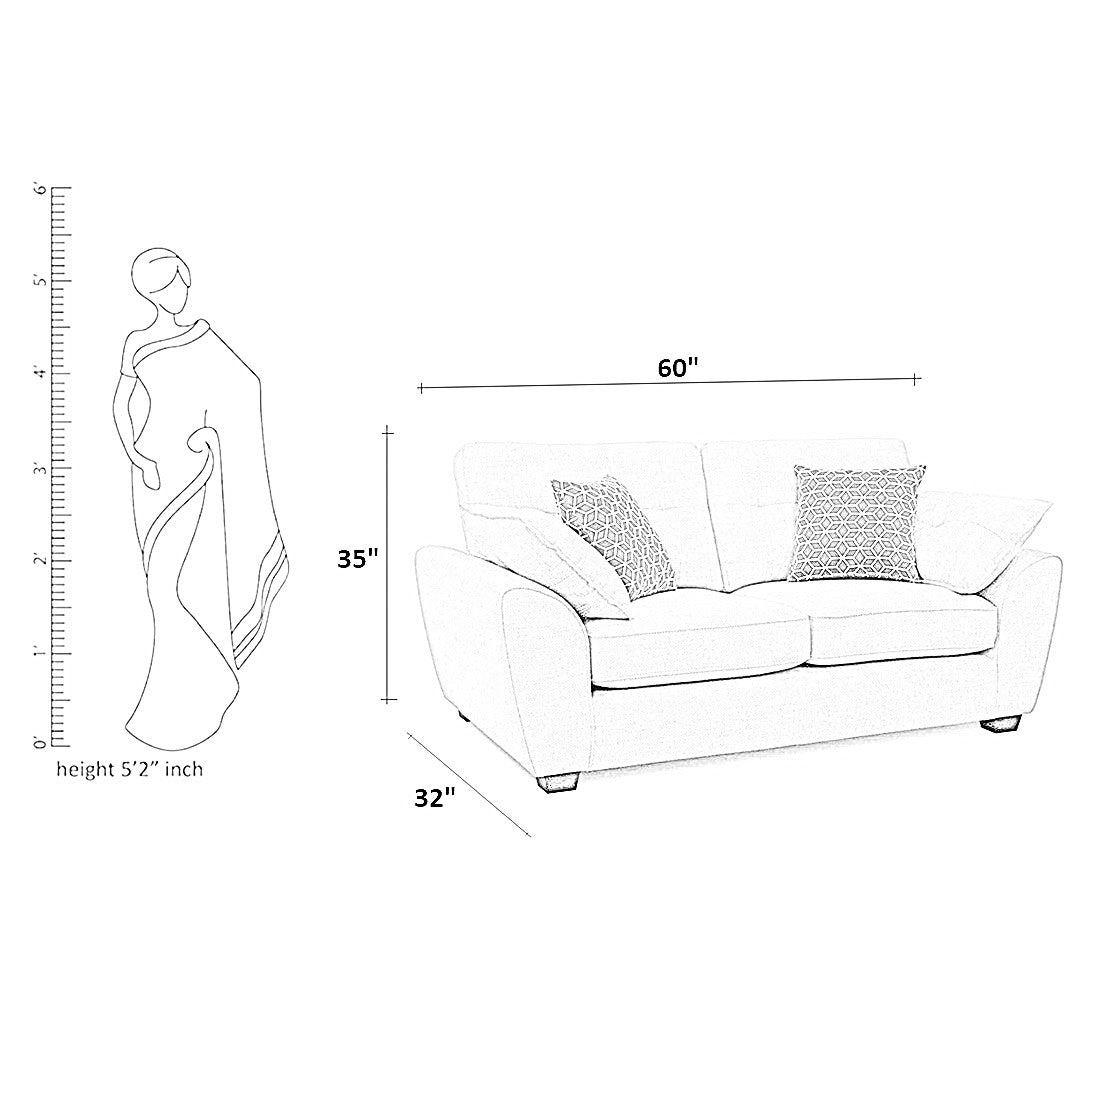 Hatfield 2 Seater Fabric Sofa for Living Room - Torque India